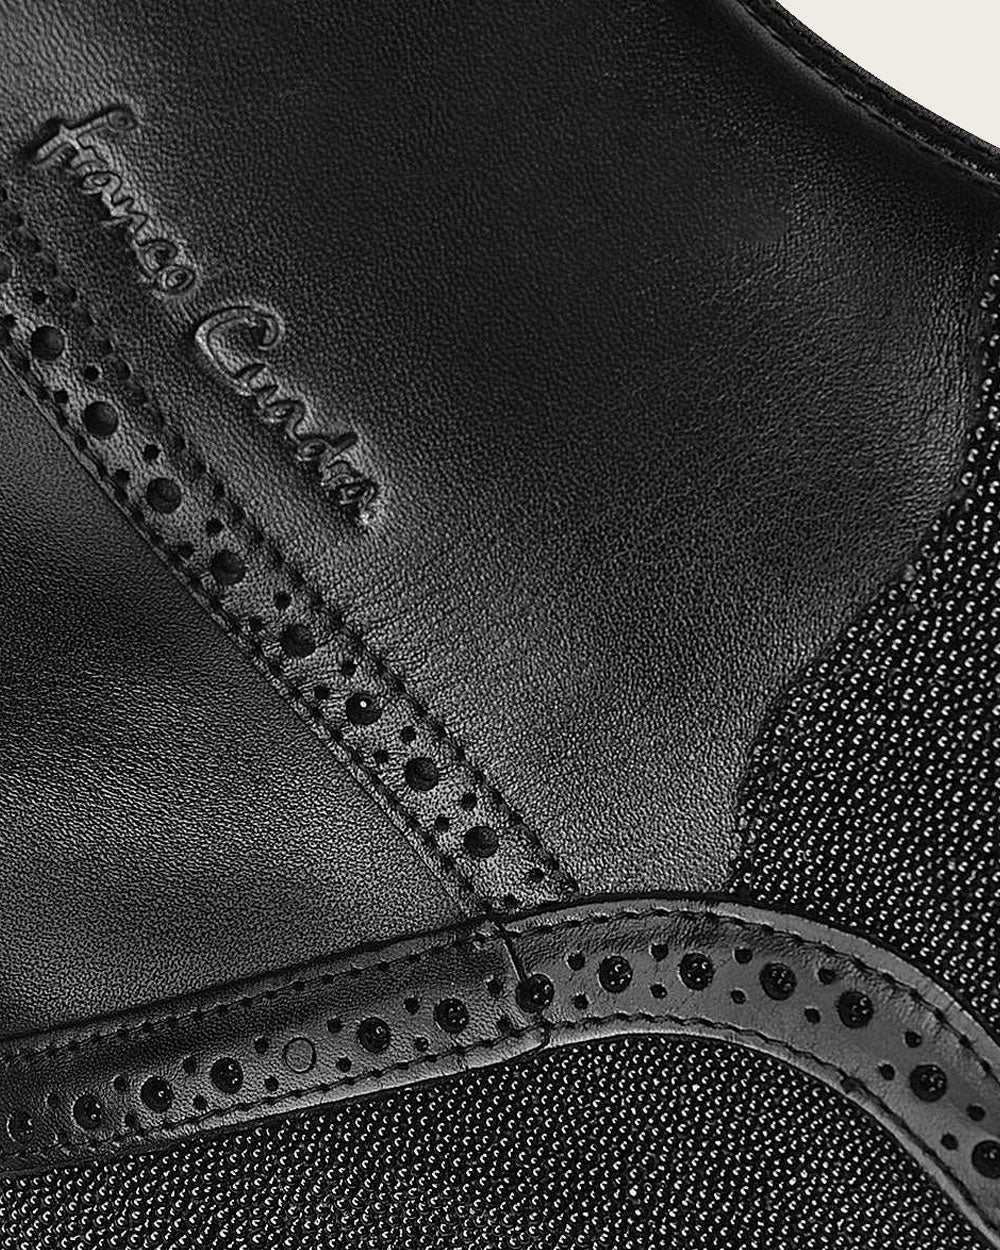 Cuadra Boots: Make a lasting impression with black stingray leather. 